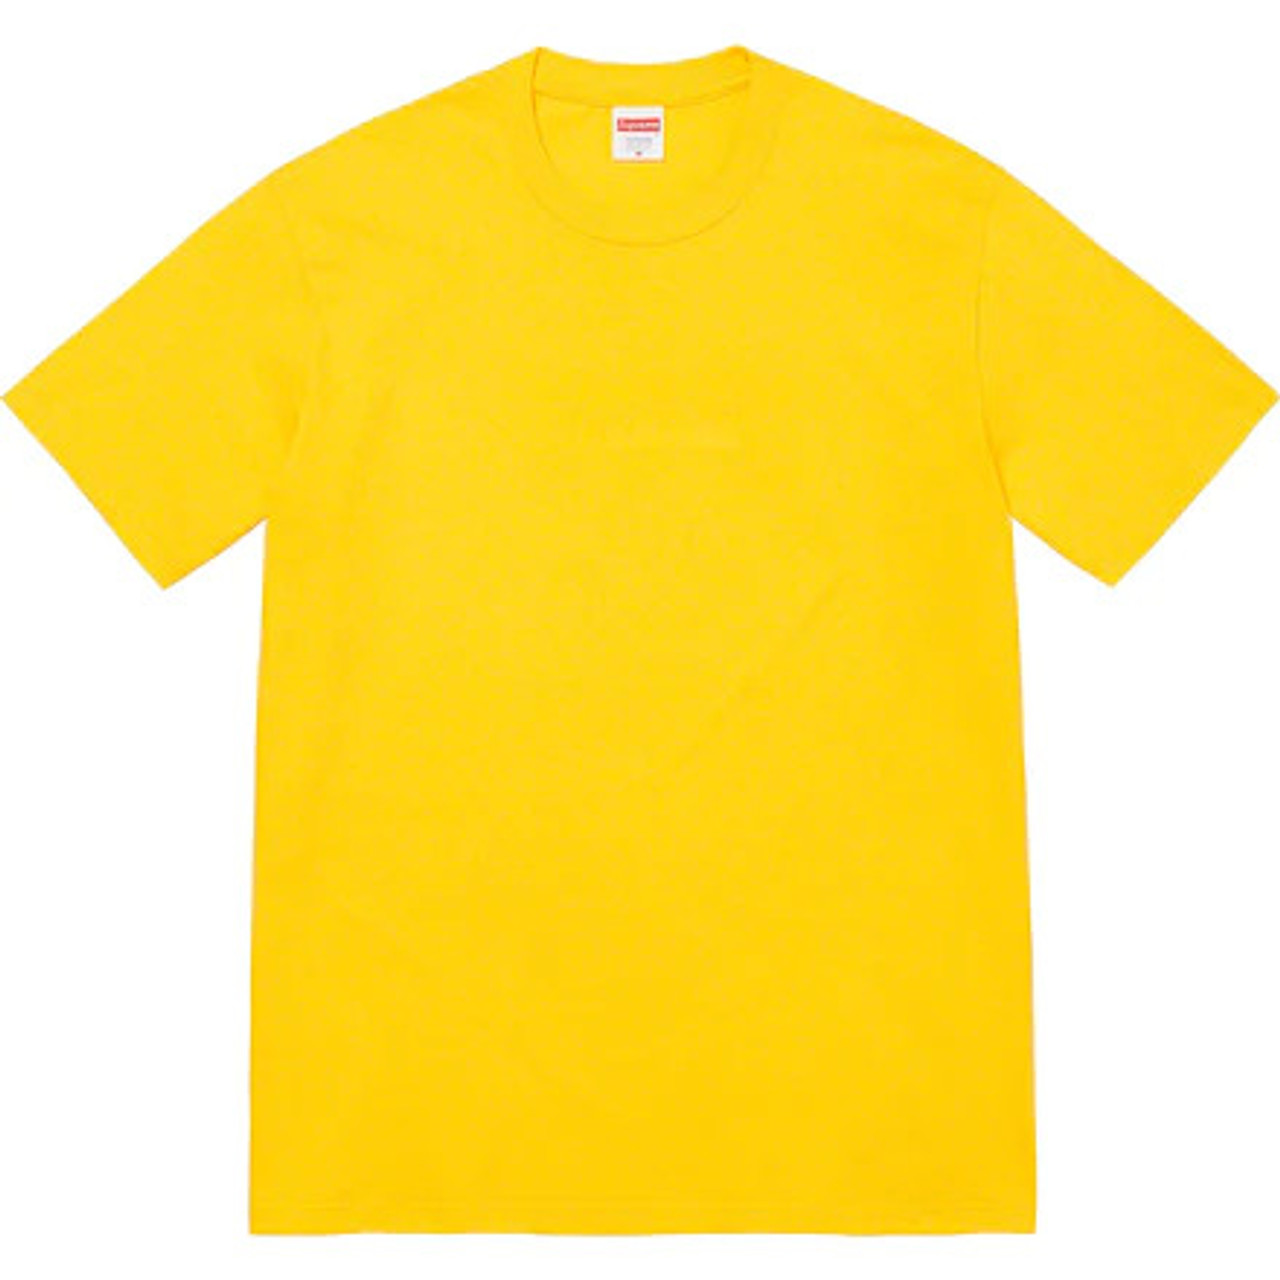 Supreme Tonal Box Logo Tee Yellow S/S 23' Sz M (#9708)